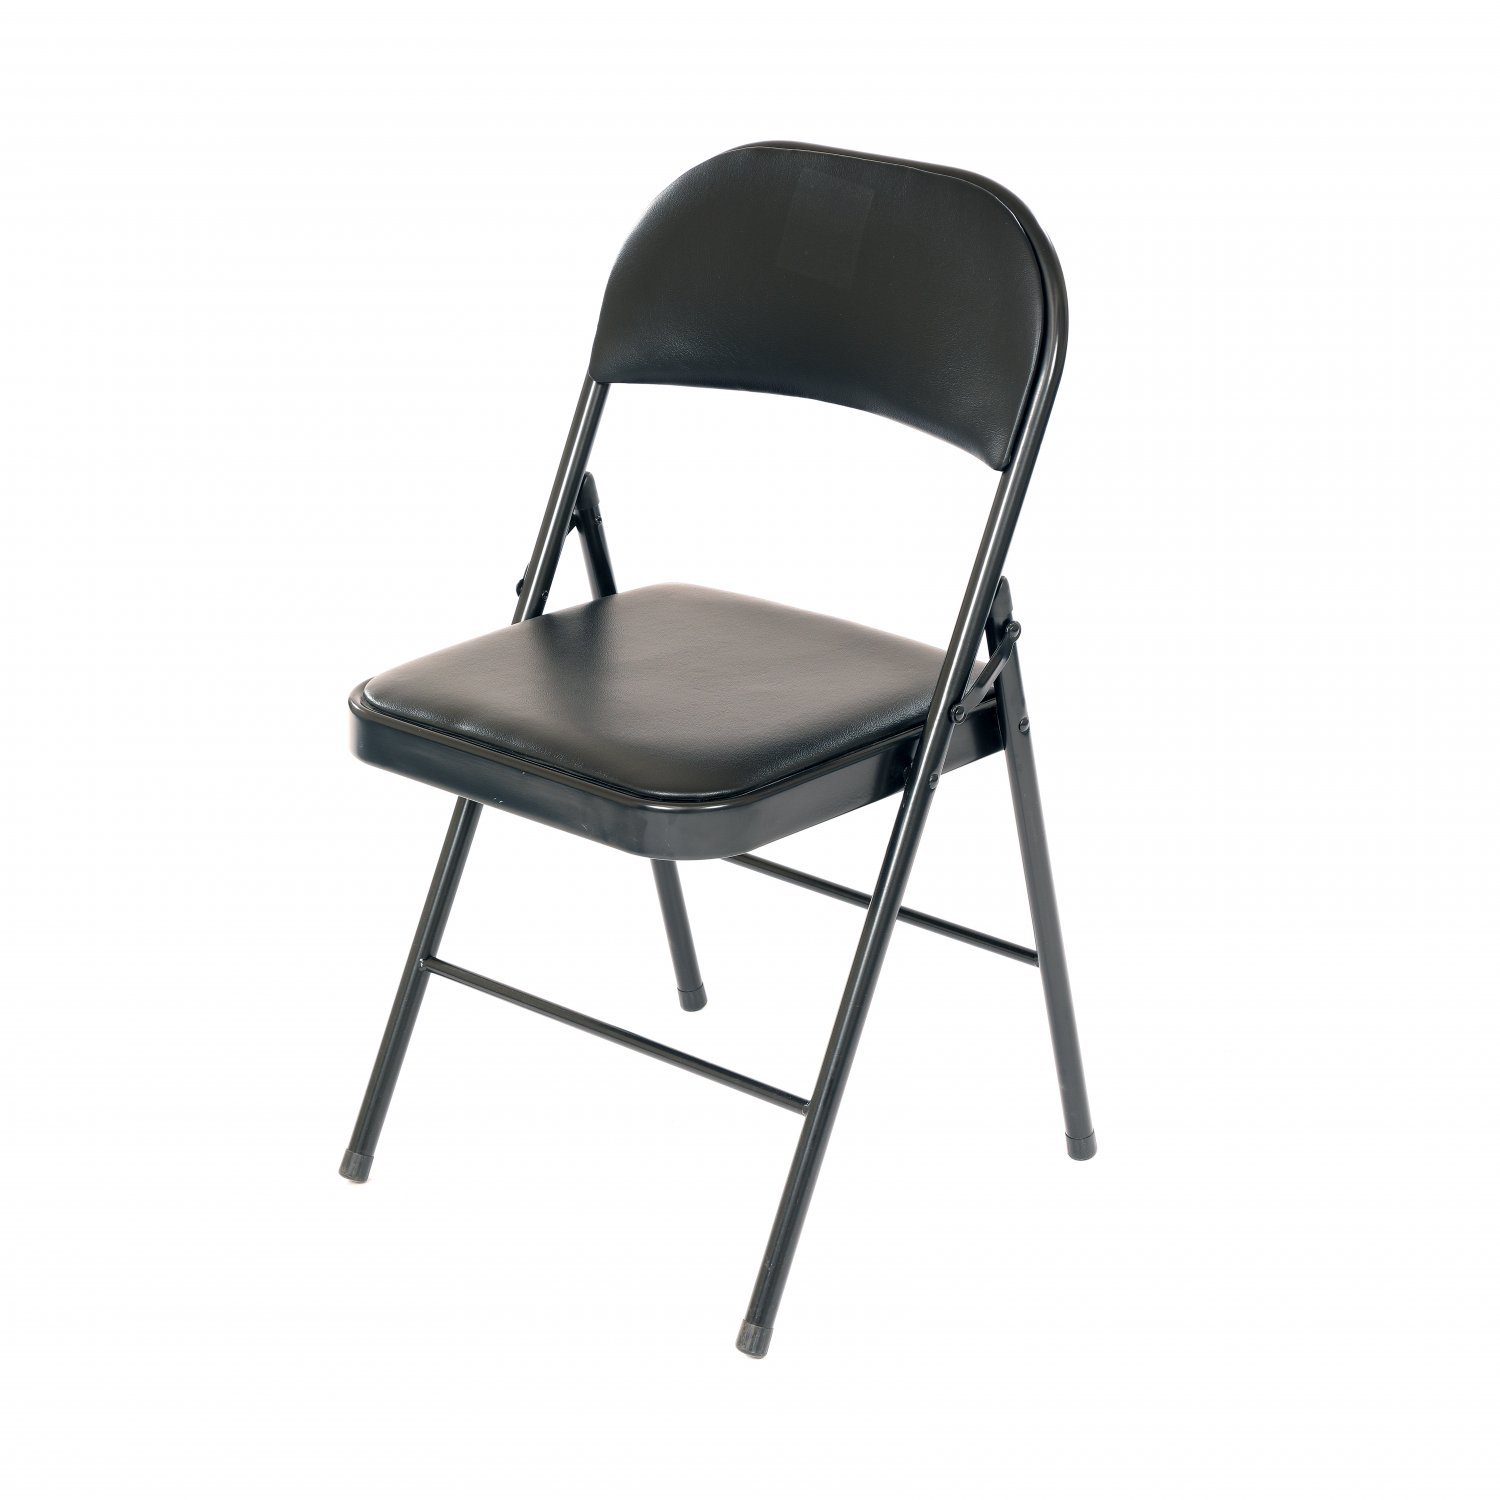 Oypla | Folding Metal Chair - Black | Shop Online Today